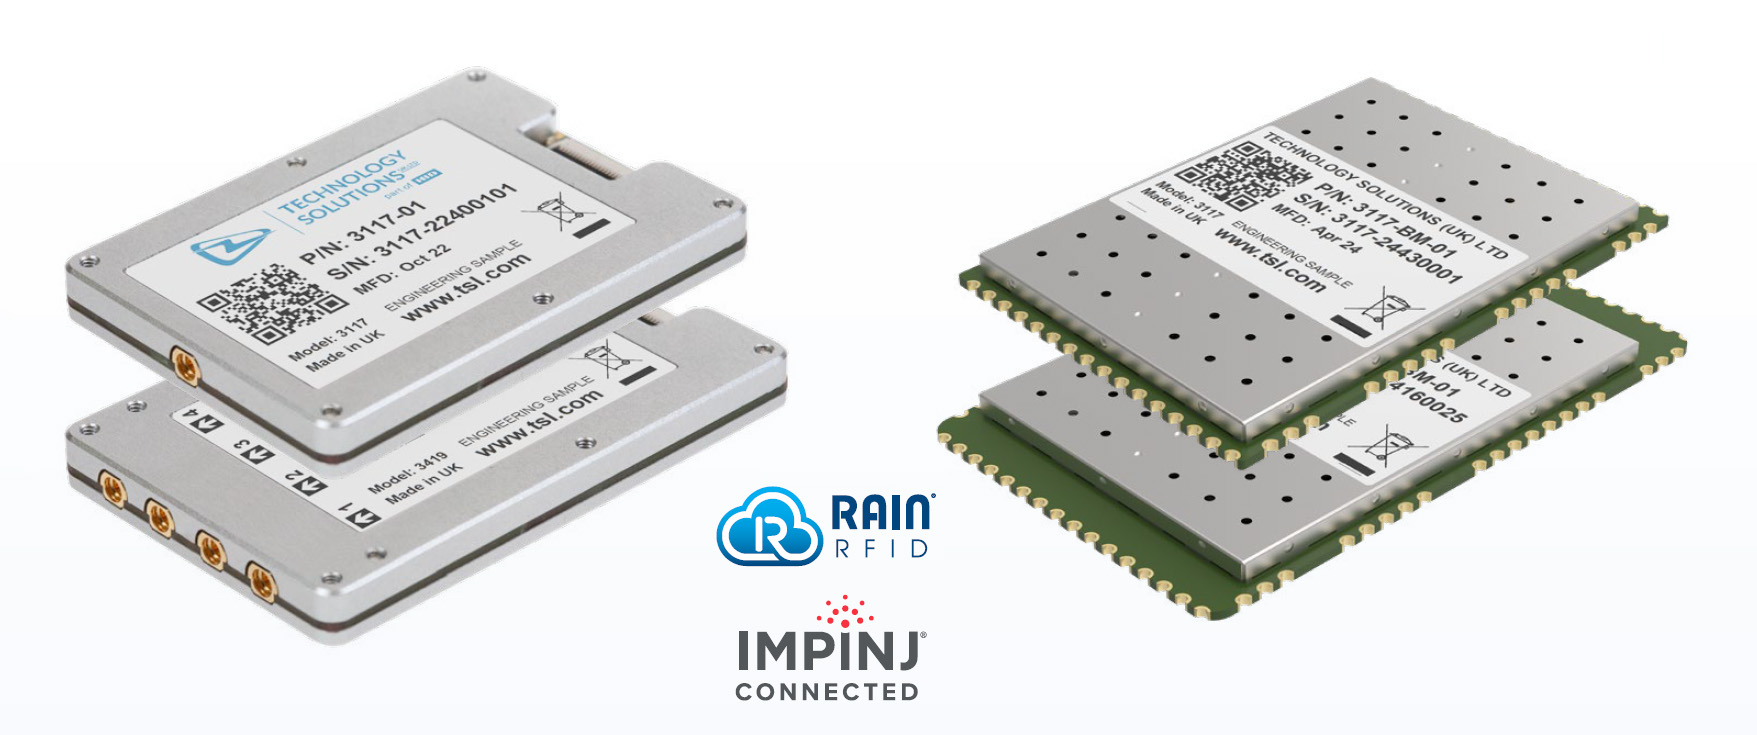 TSL RAIN RFID UHF Reader modules